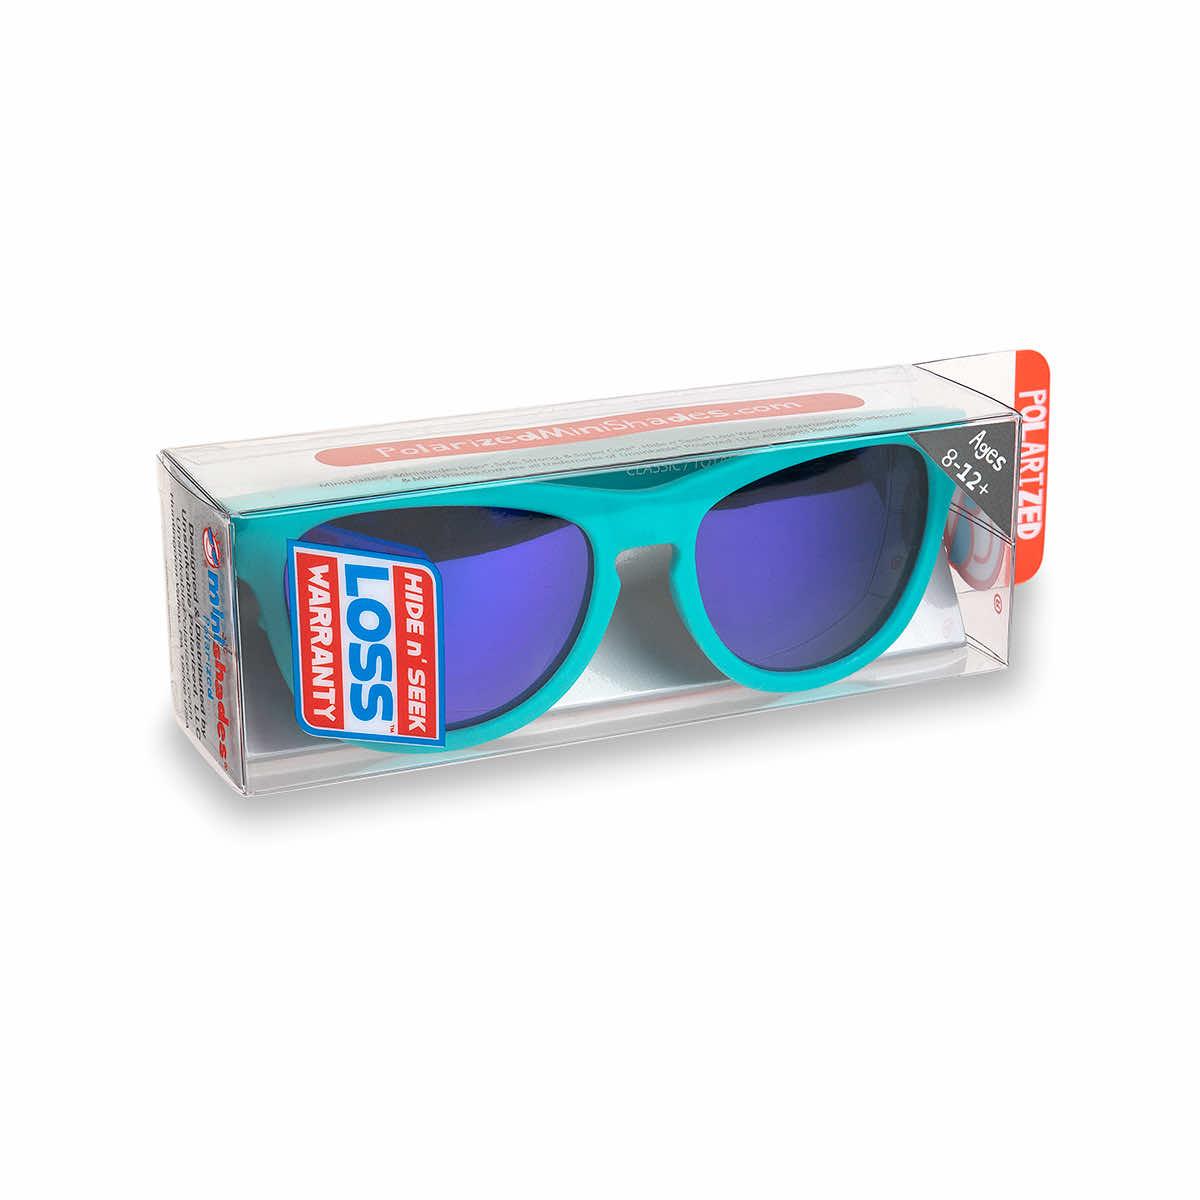 Kids Mini Shades Polarized Teal Sunglasses Ages 812 - Teal